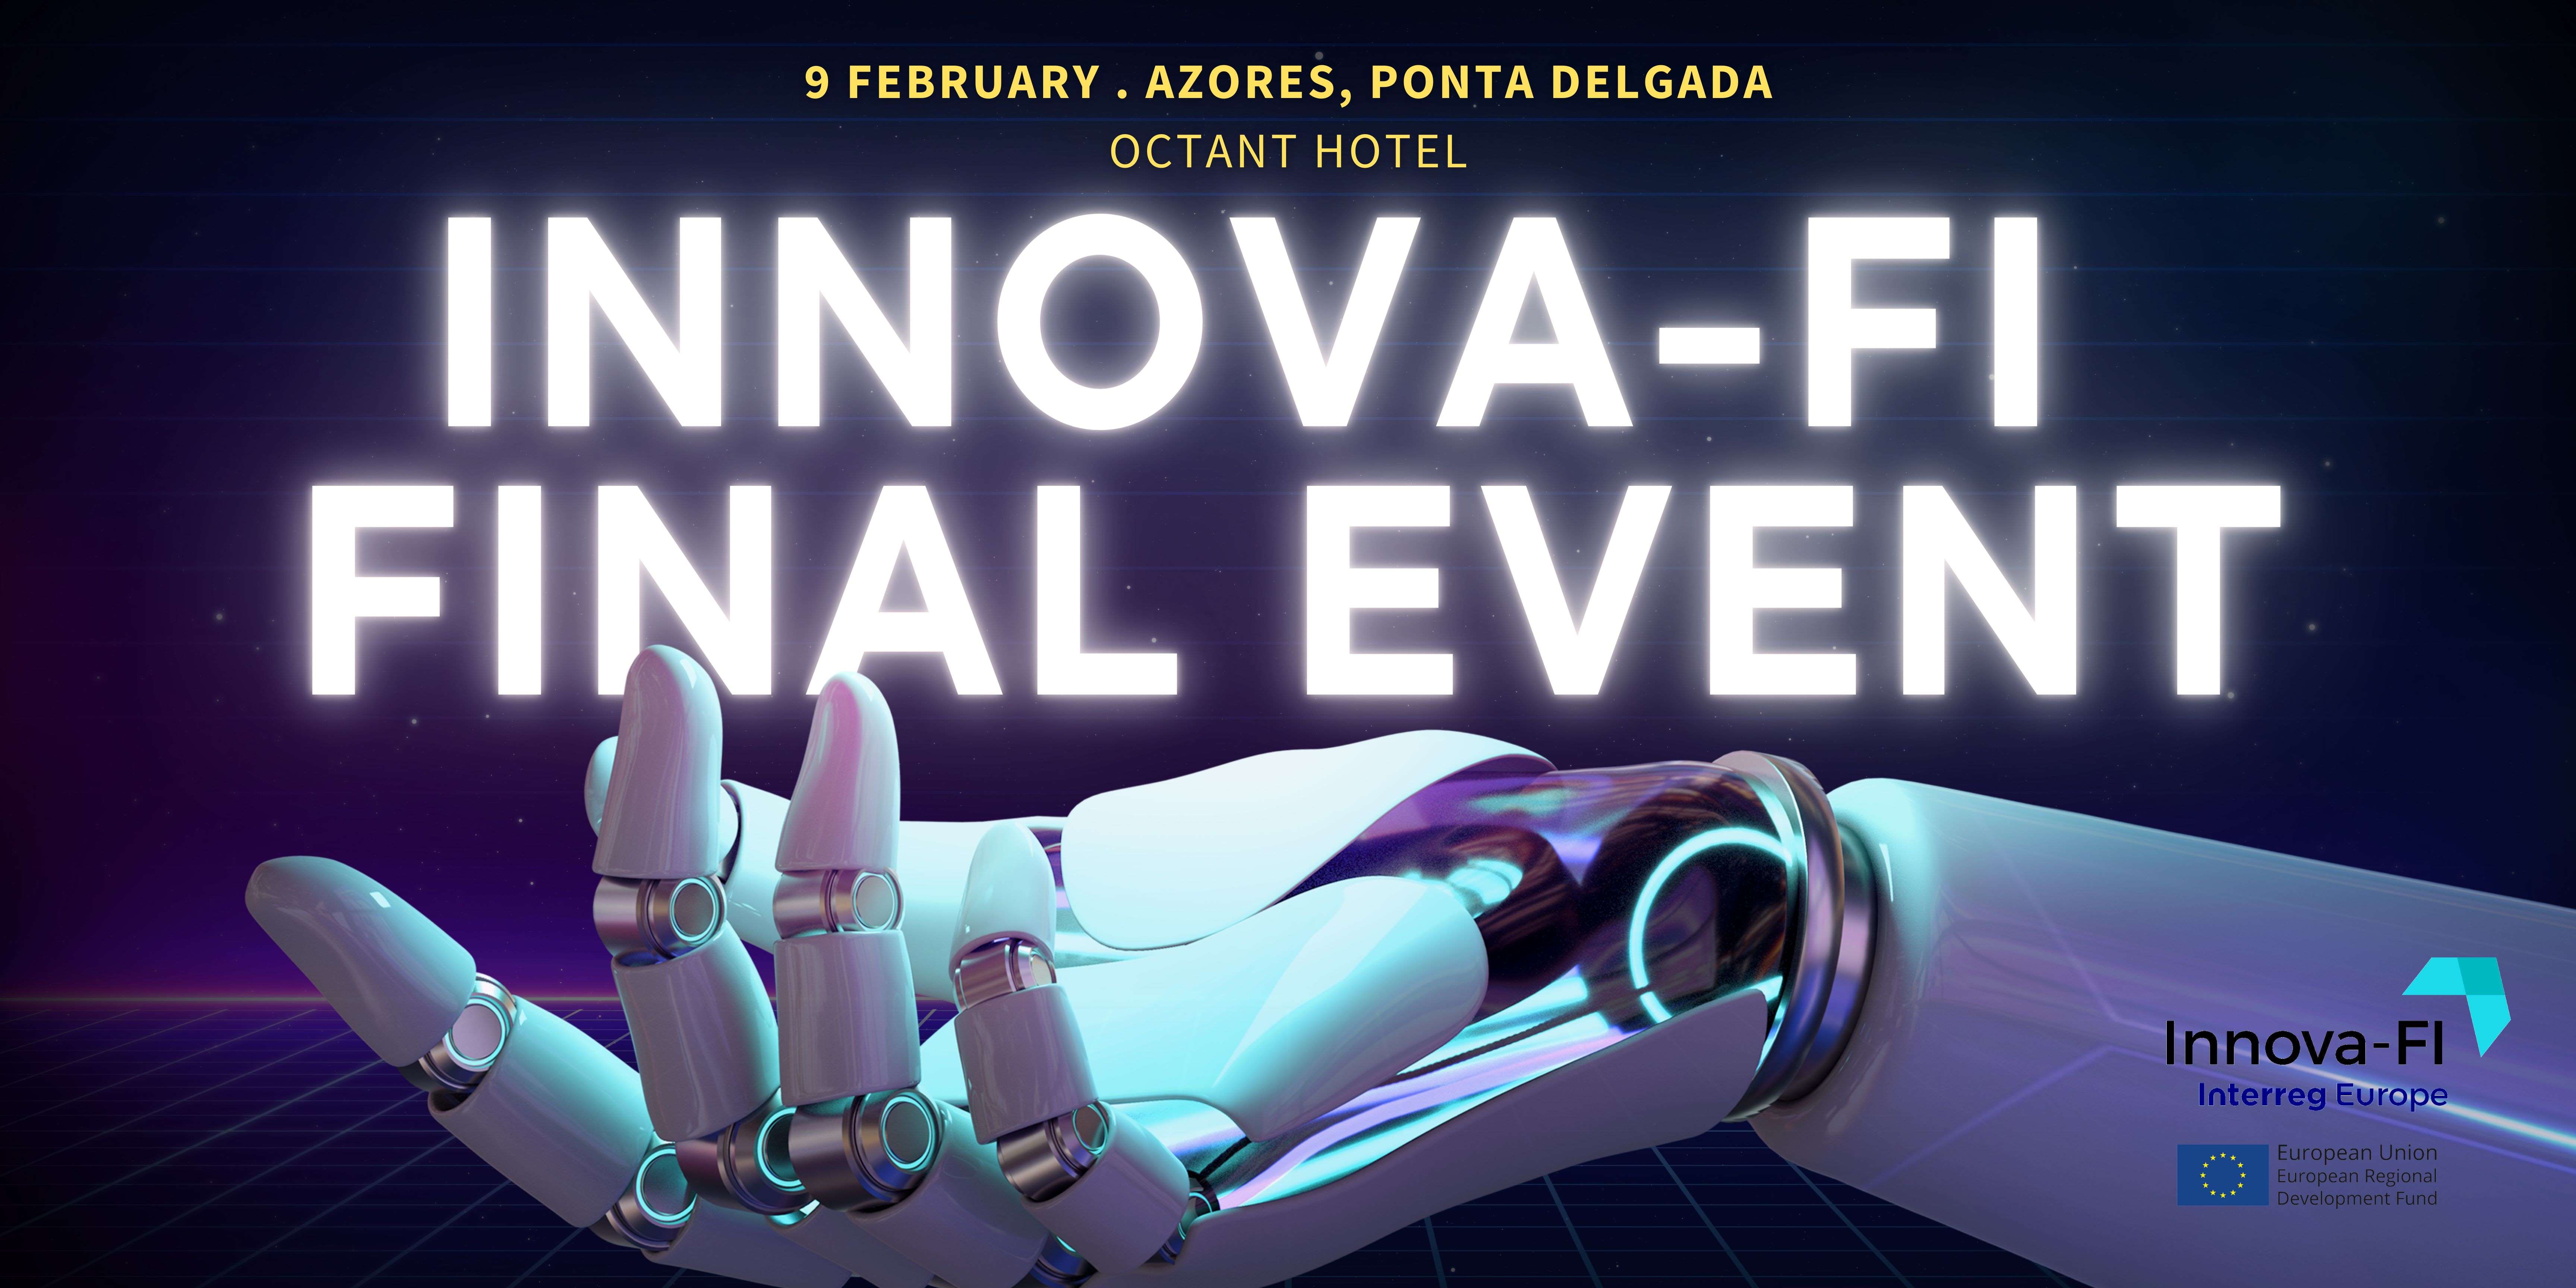 Innova-FI Final Event